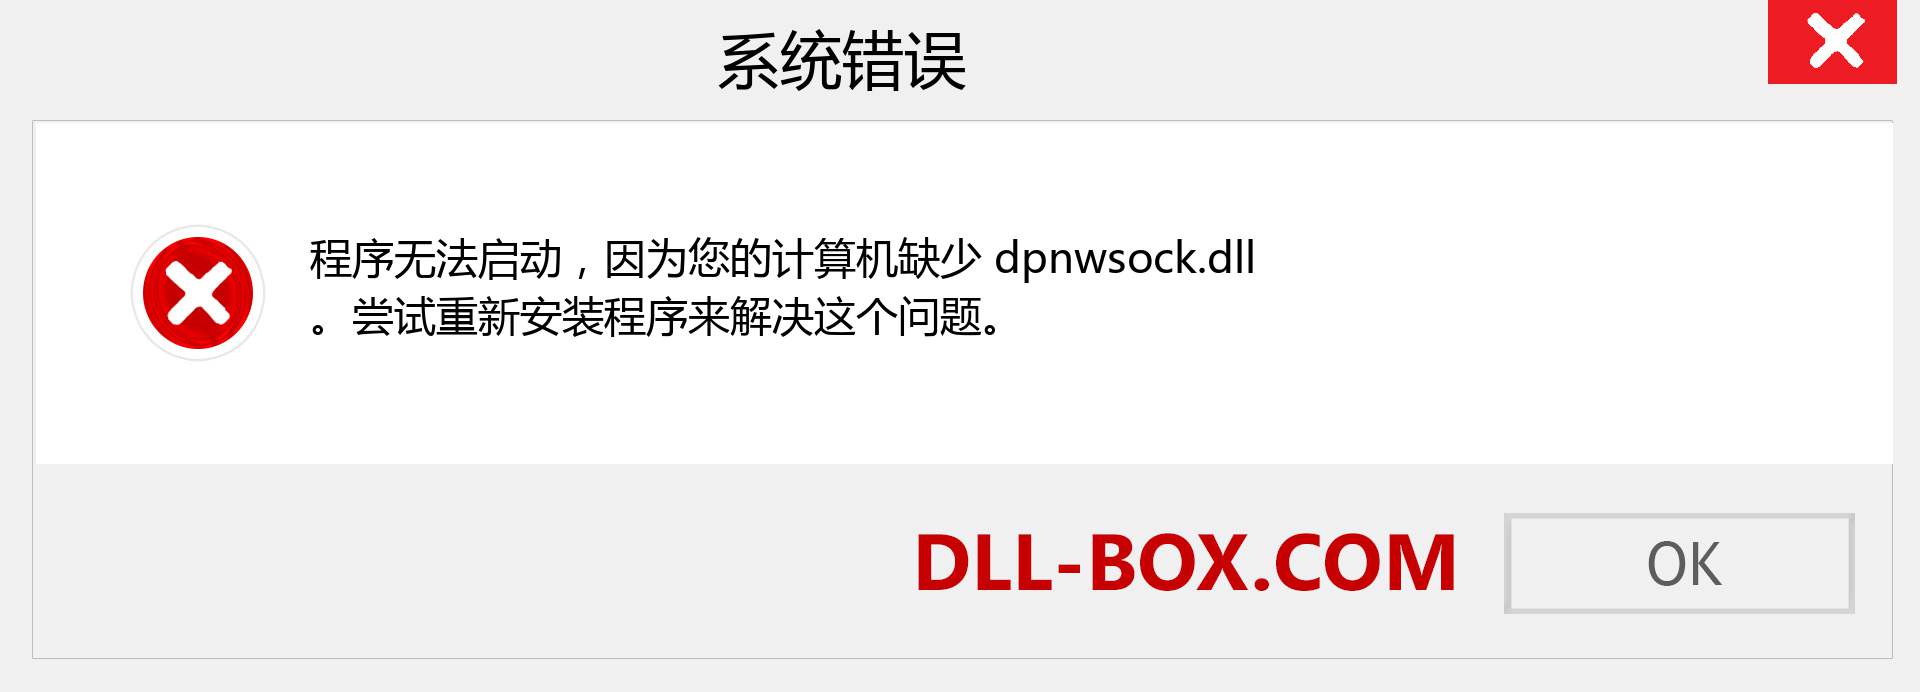 dpnwsock.dll 文件丢失？。 适用于 Windows 7、8、10 的下载 - 修复 Windows、照片、图像上的 dpnwsock dll 丢失错误